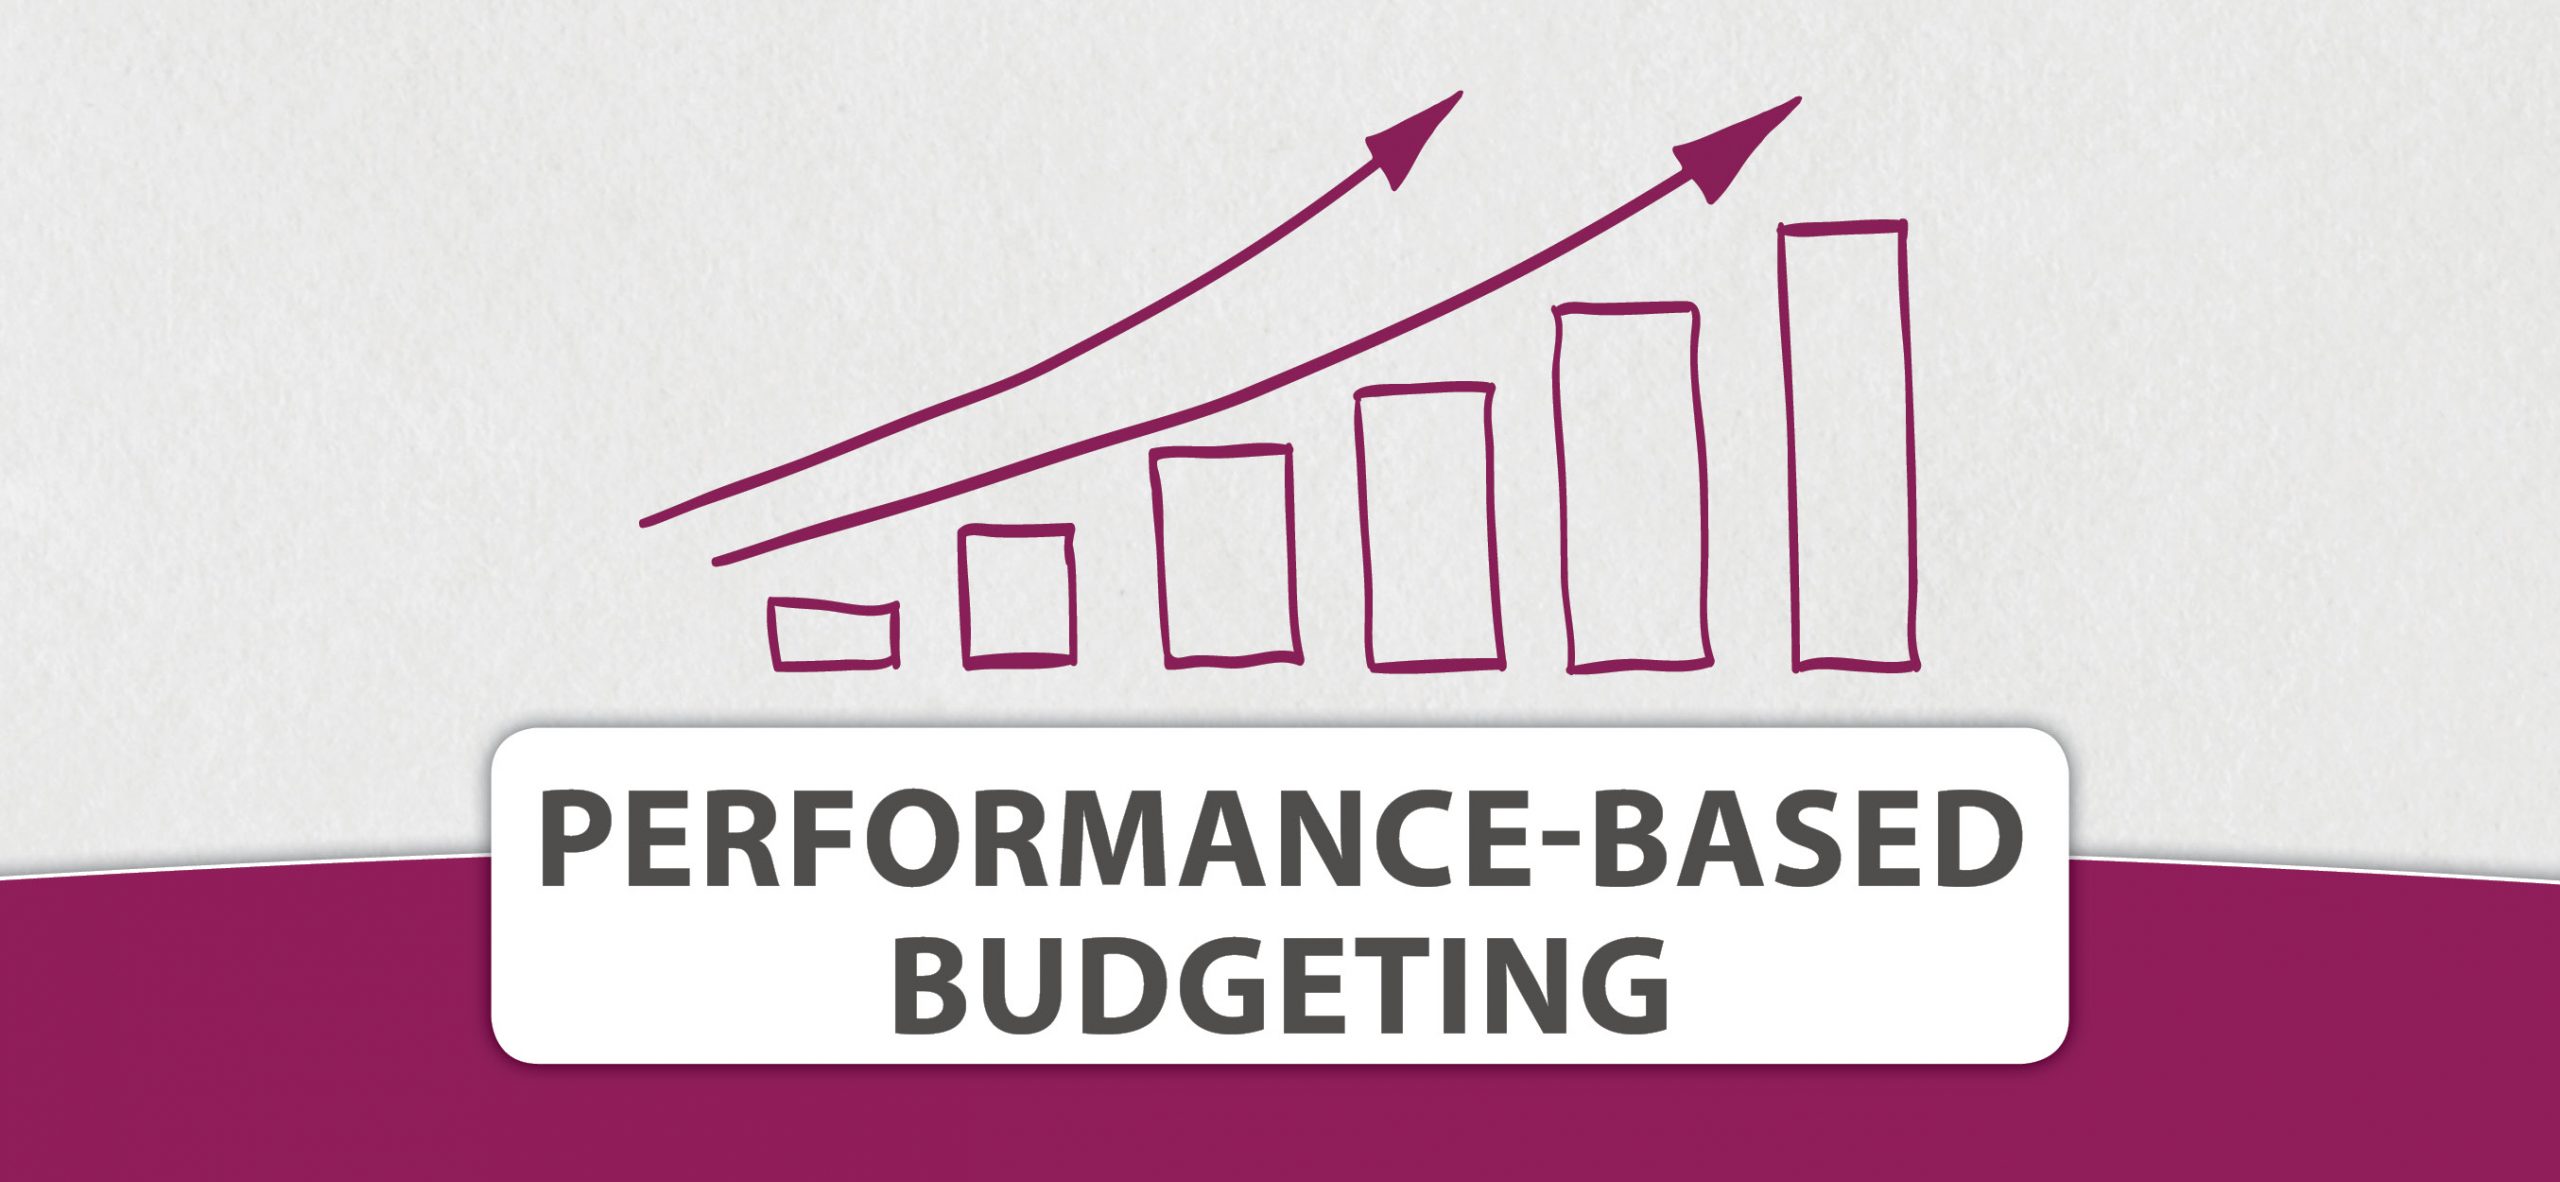 Performance-based budgeting